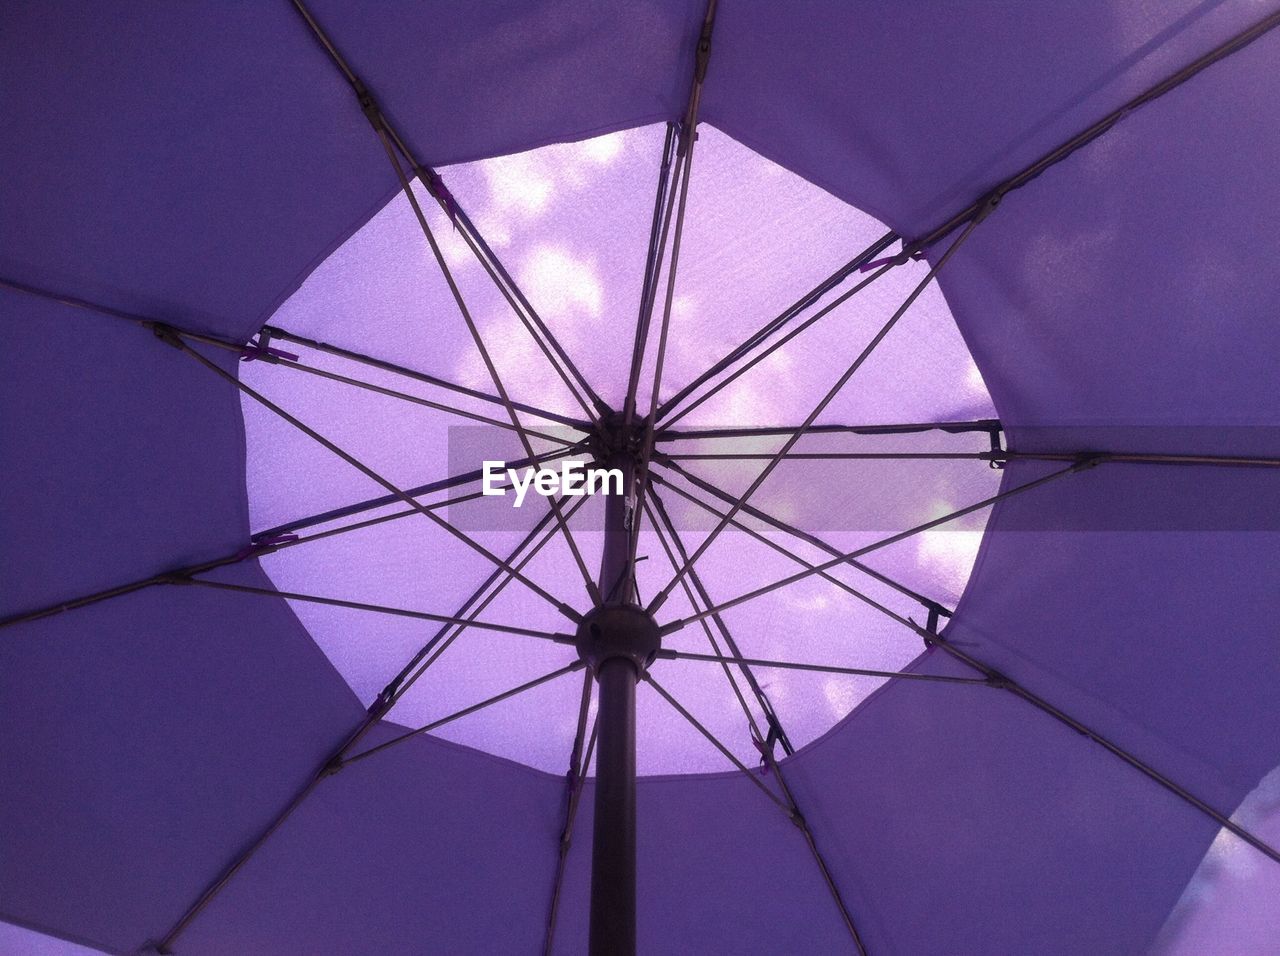 Low angle view of purple umbrella